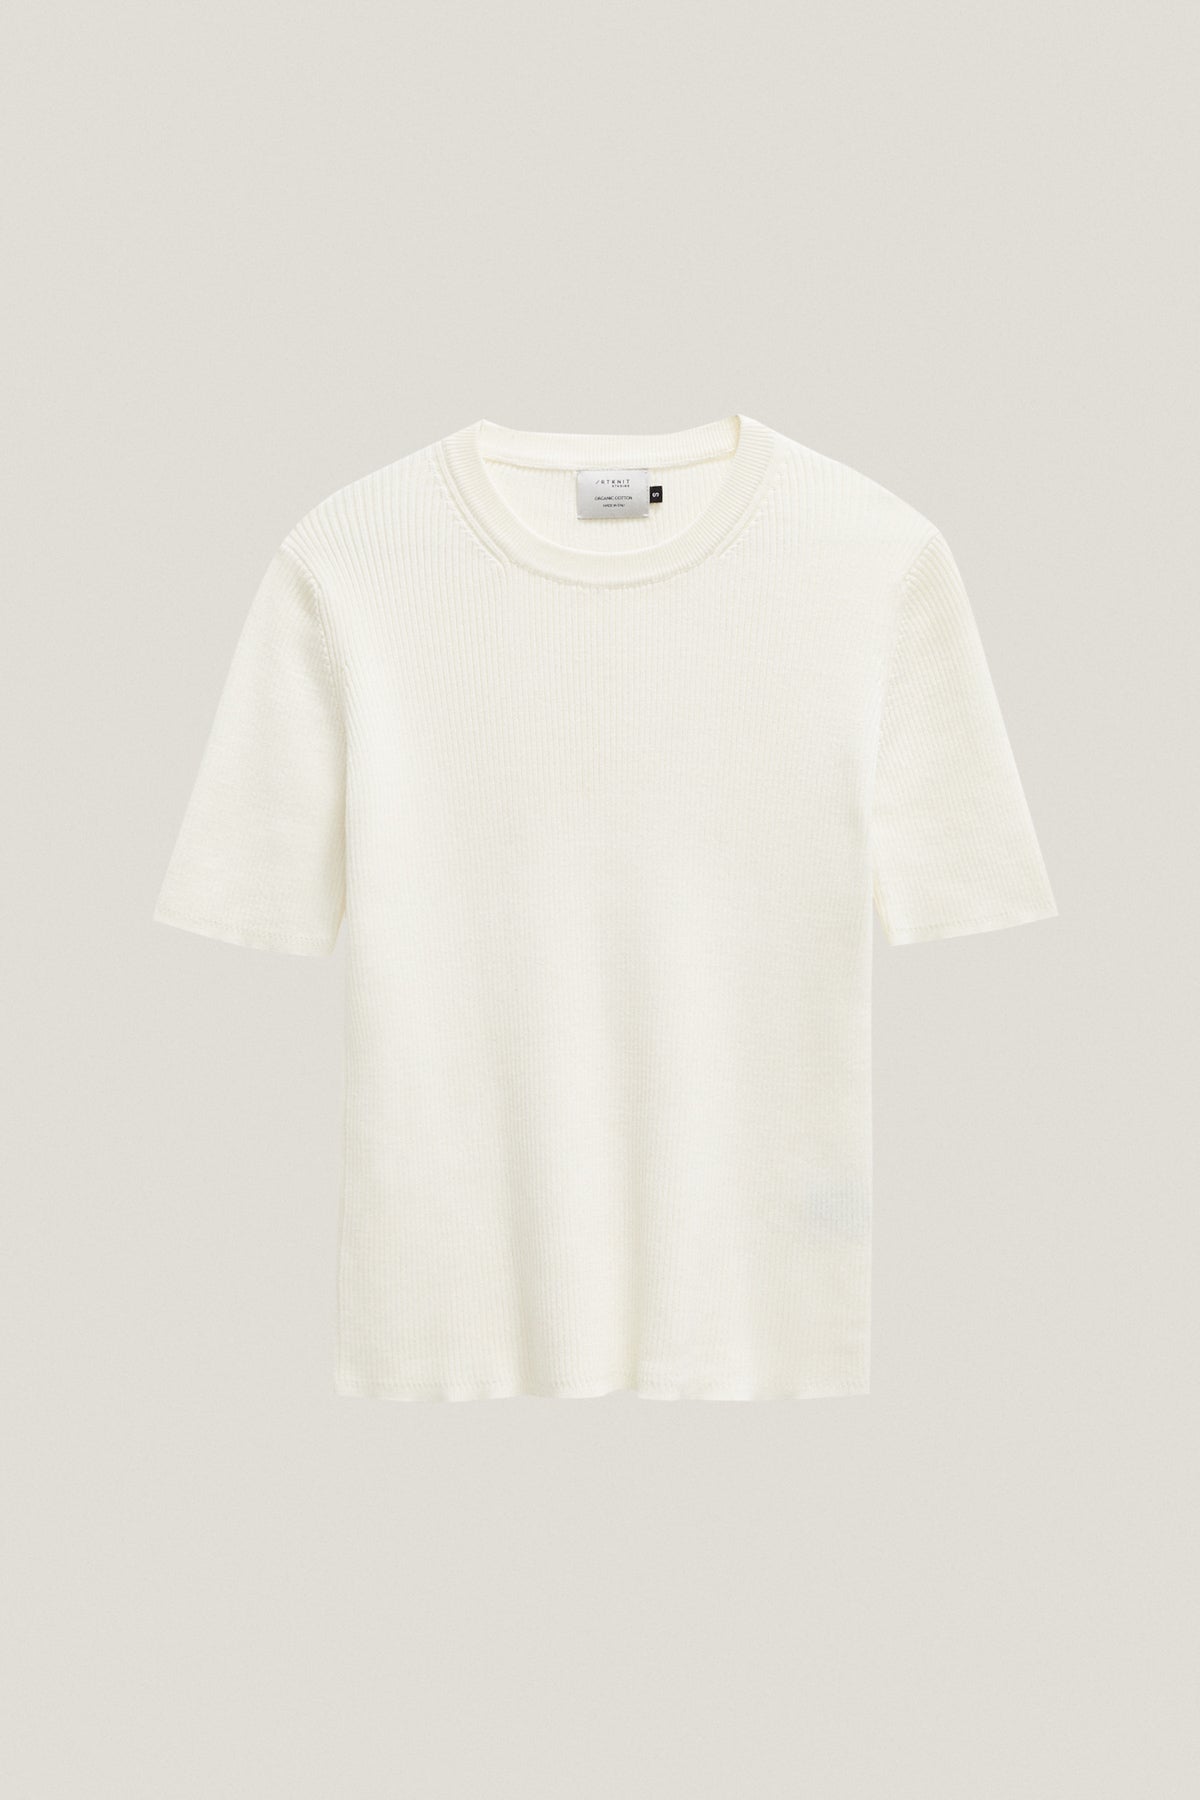 The Organic Cotton Ribbed T-Shirt